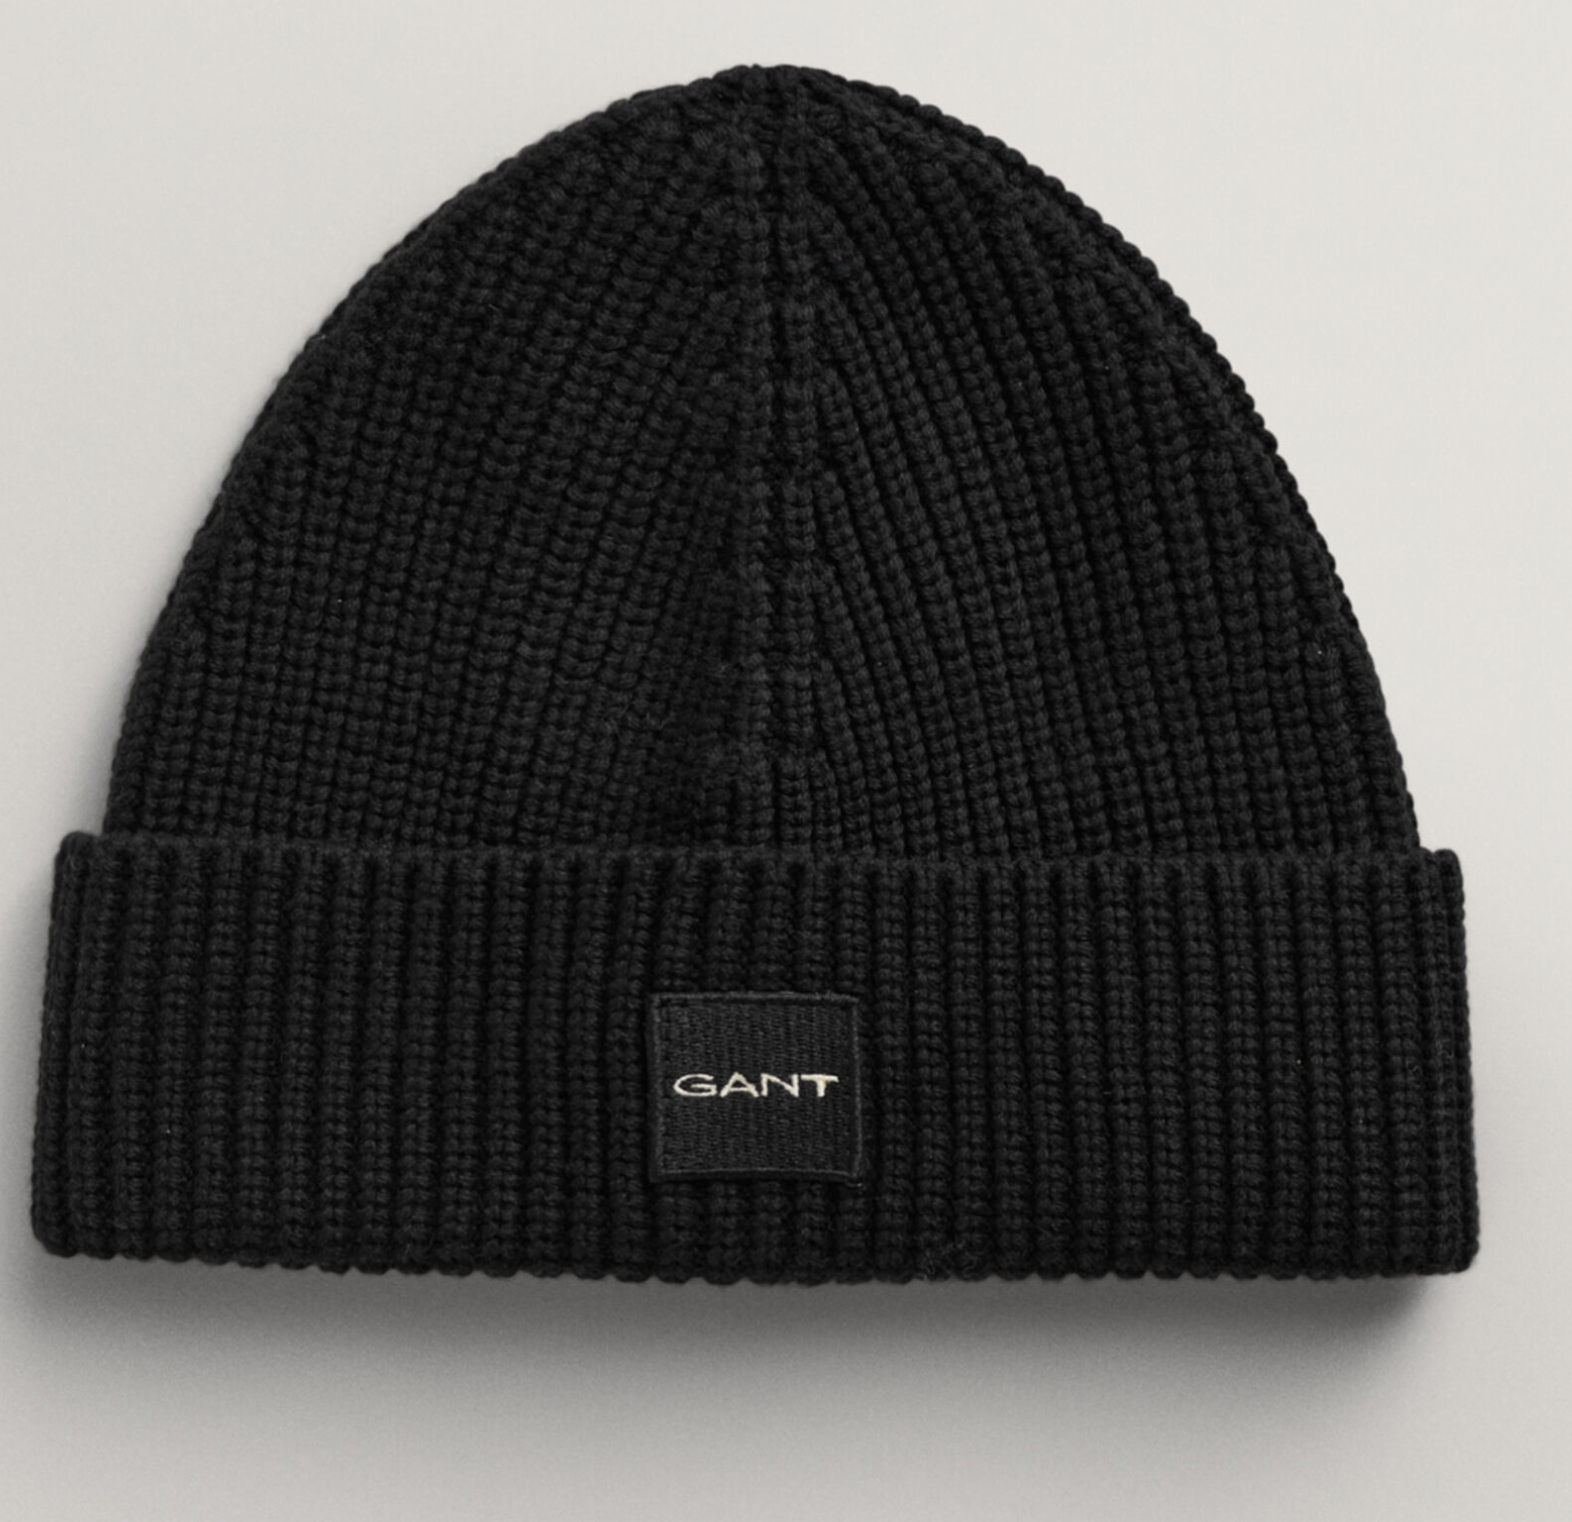 Gant "Unisex" Beanie Hat Black